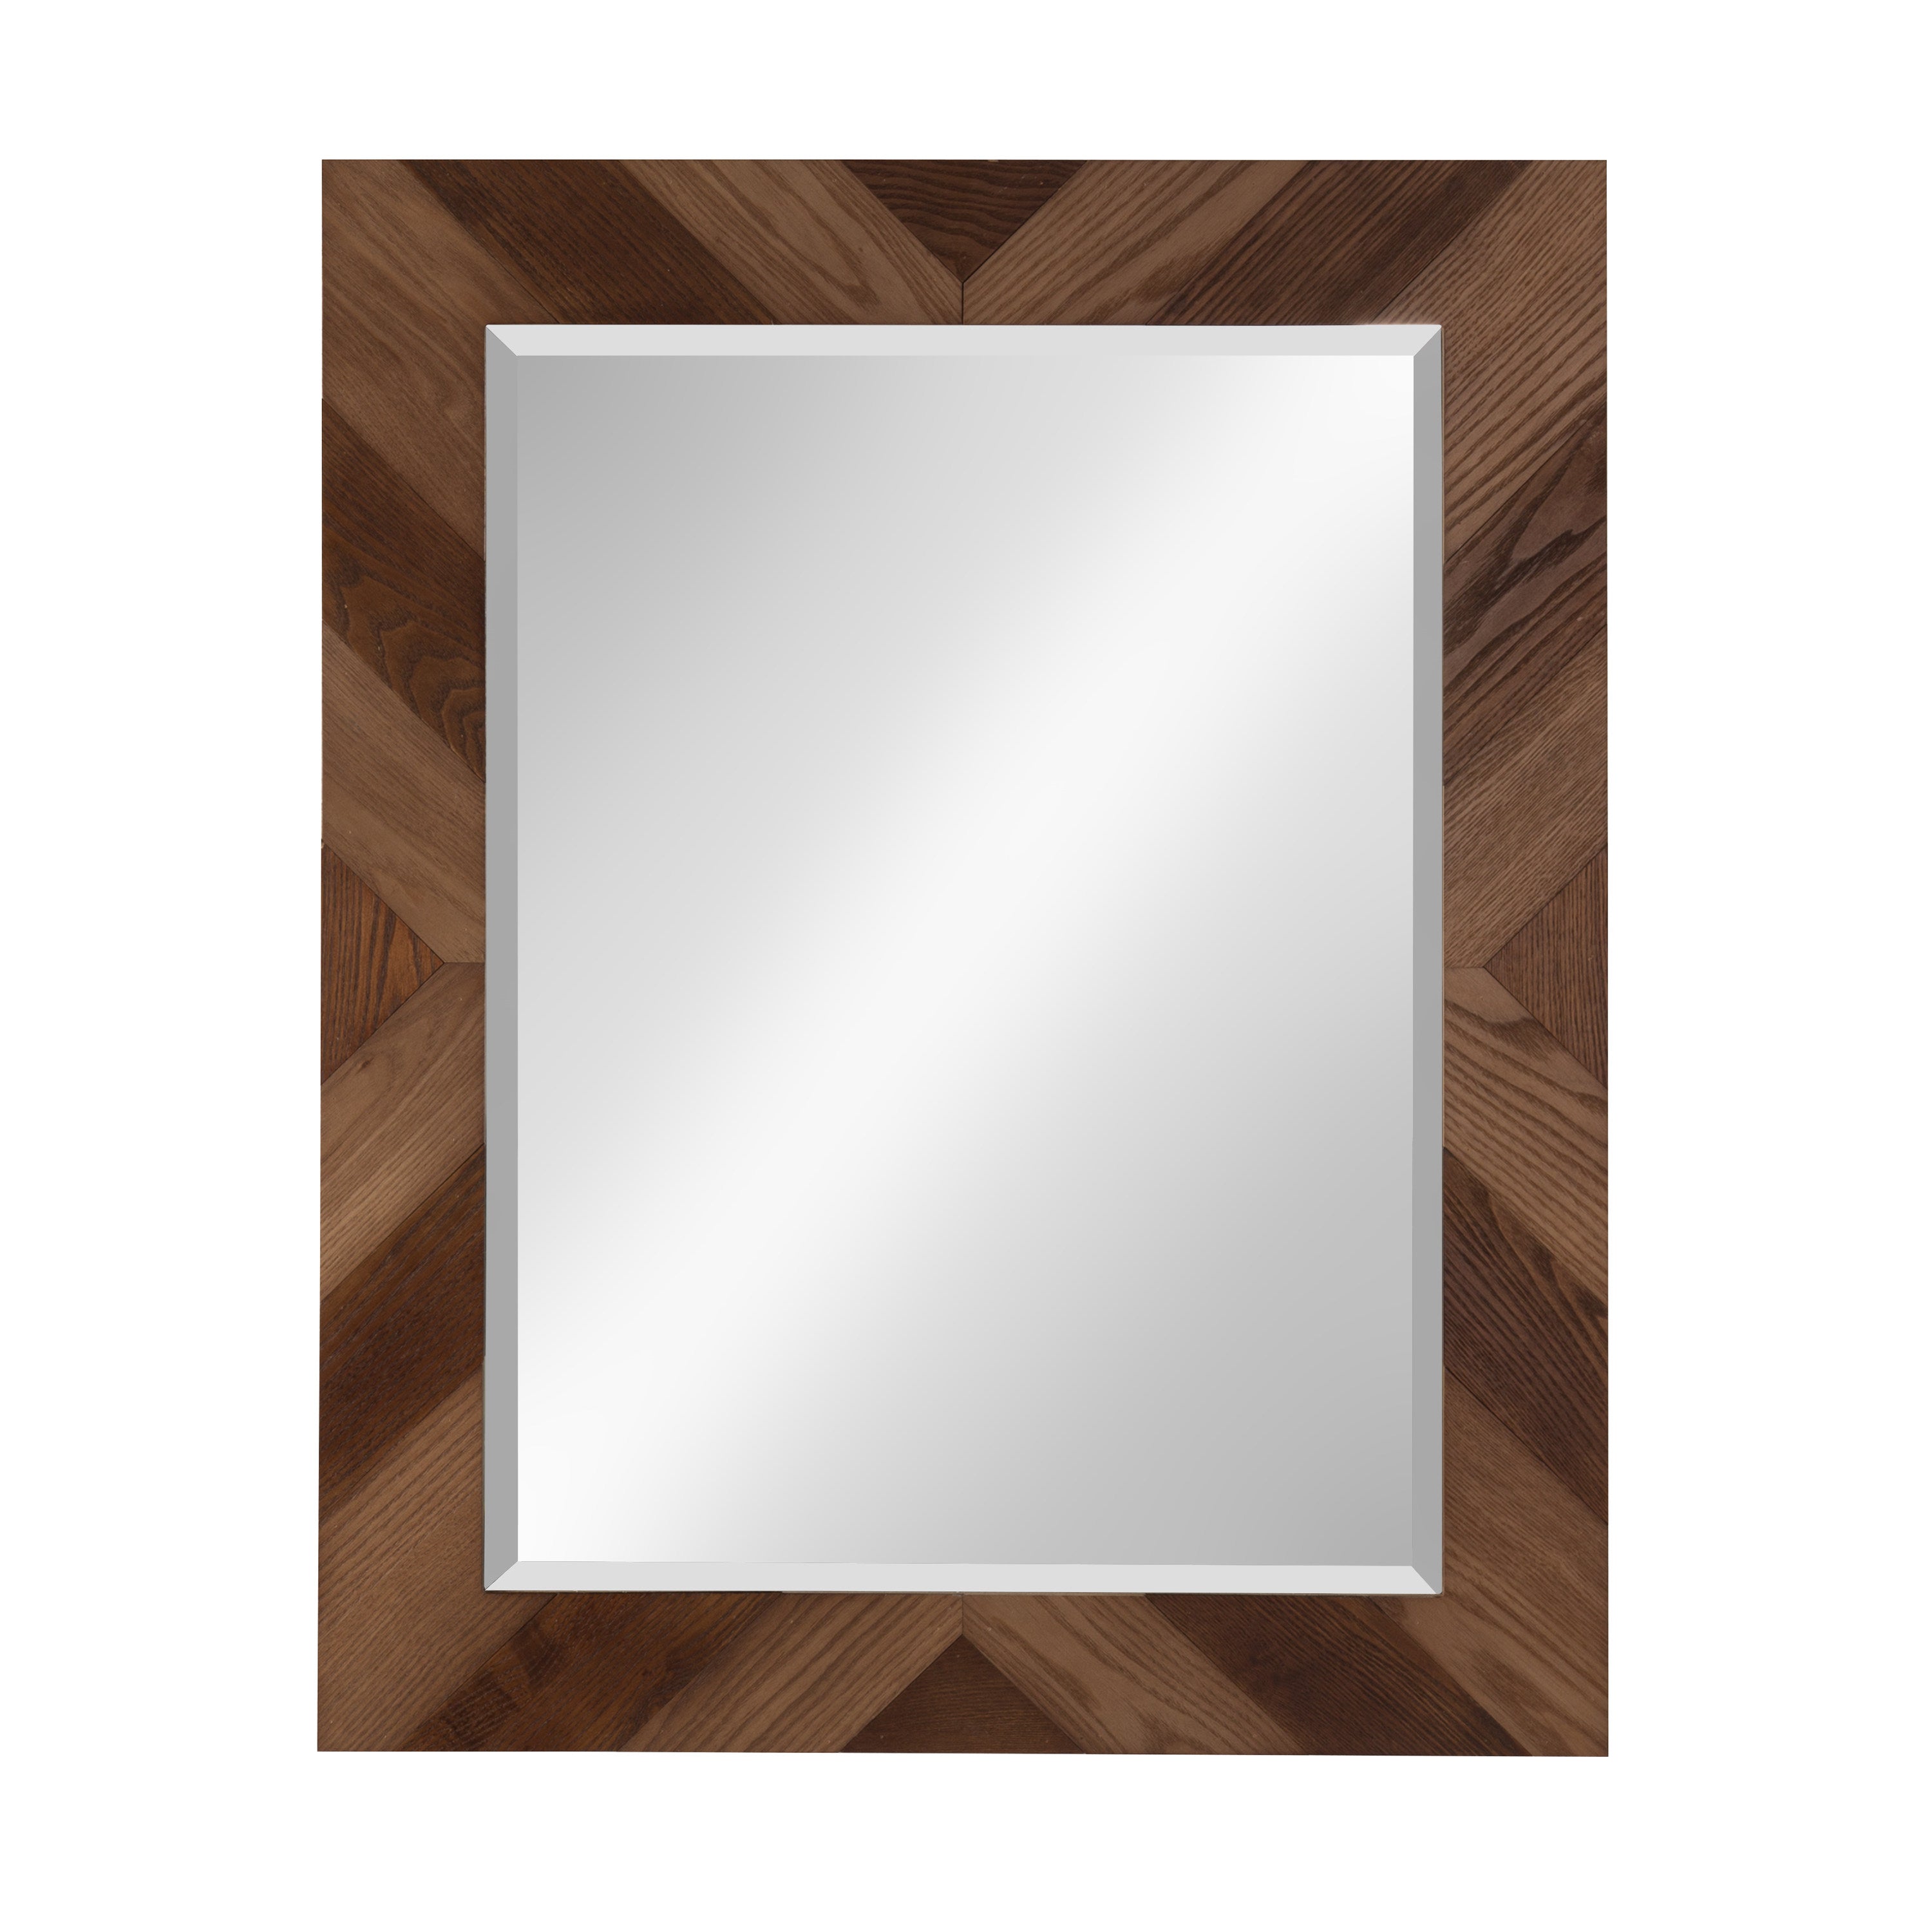 Rost Pieced Wood Framed Wall Mirror